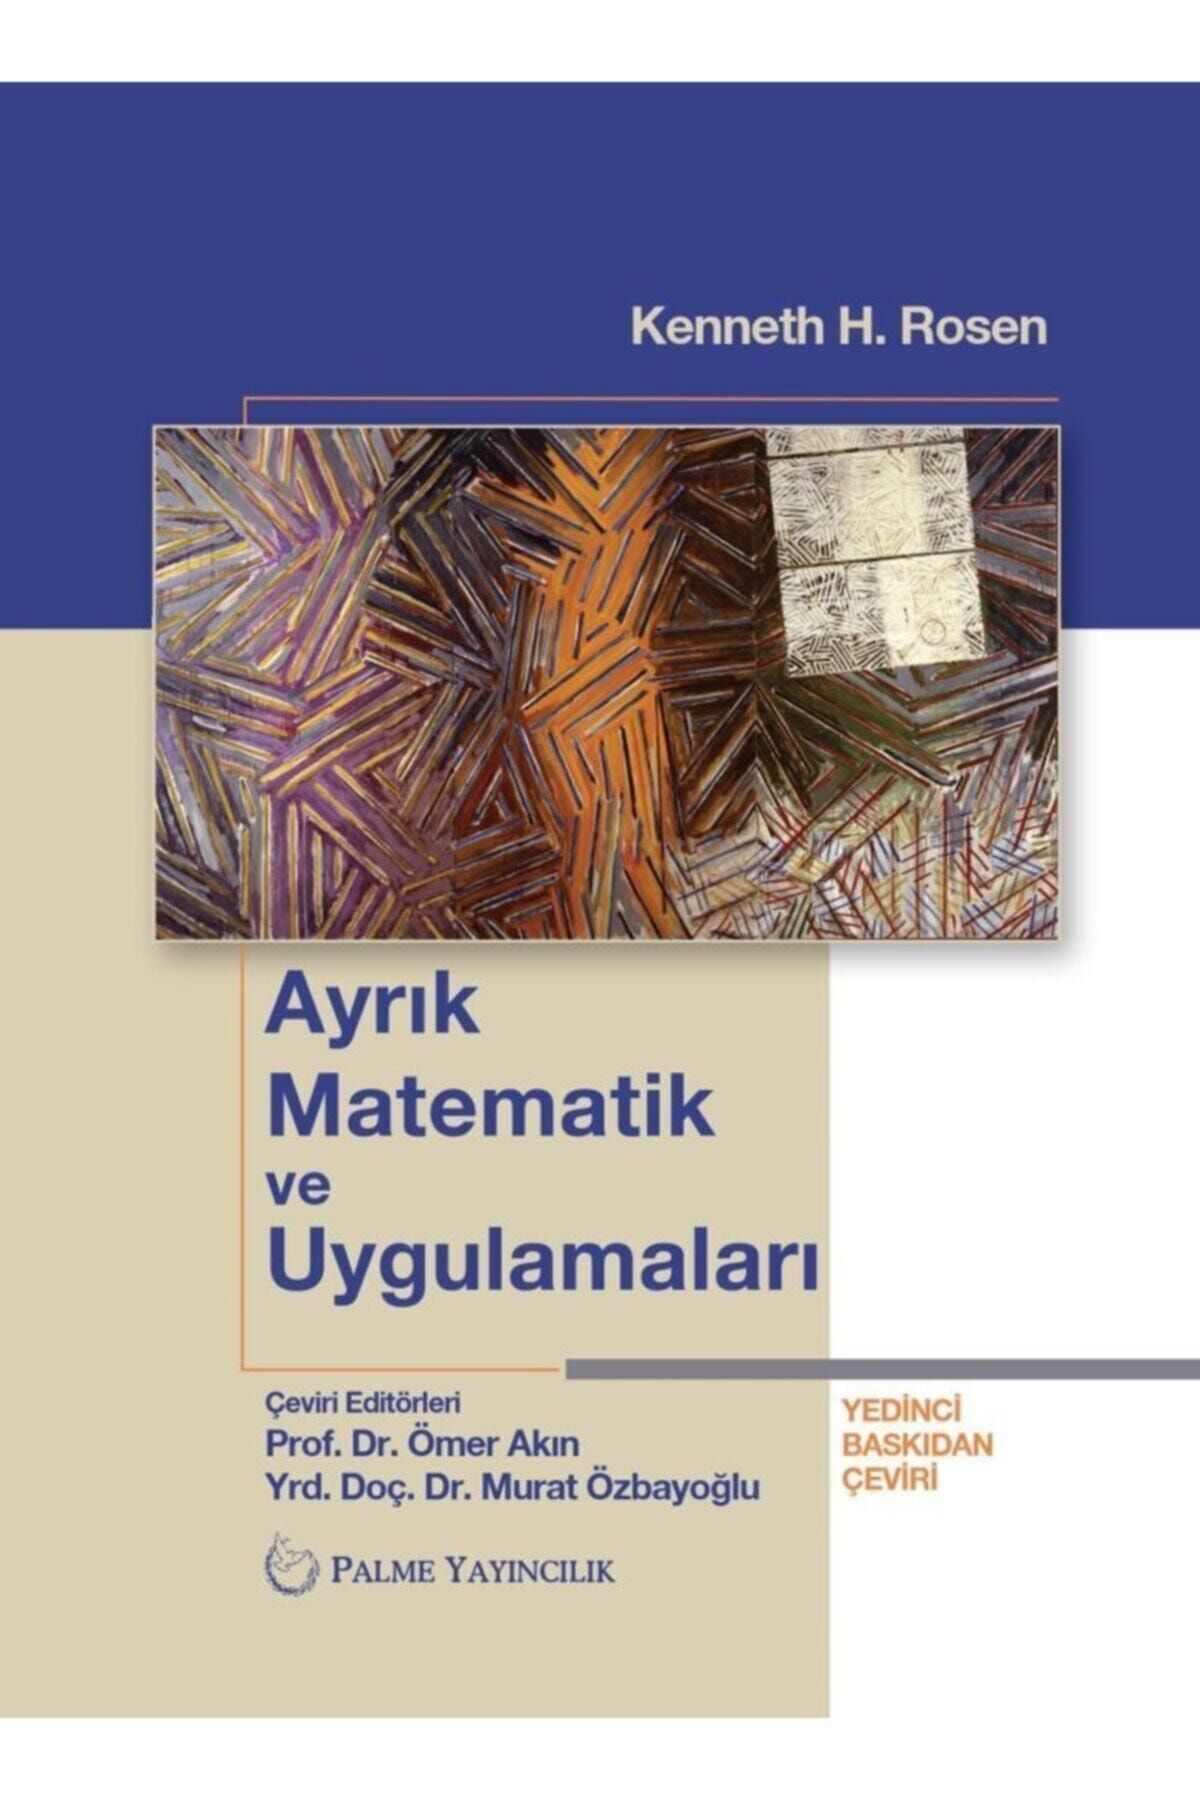 Discrete mathematics. Discrete Math and its application. Discrete Mathematics and its applications. Discrete Mathematics book.